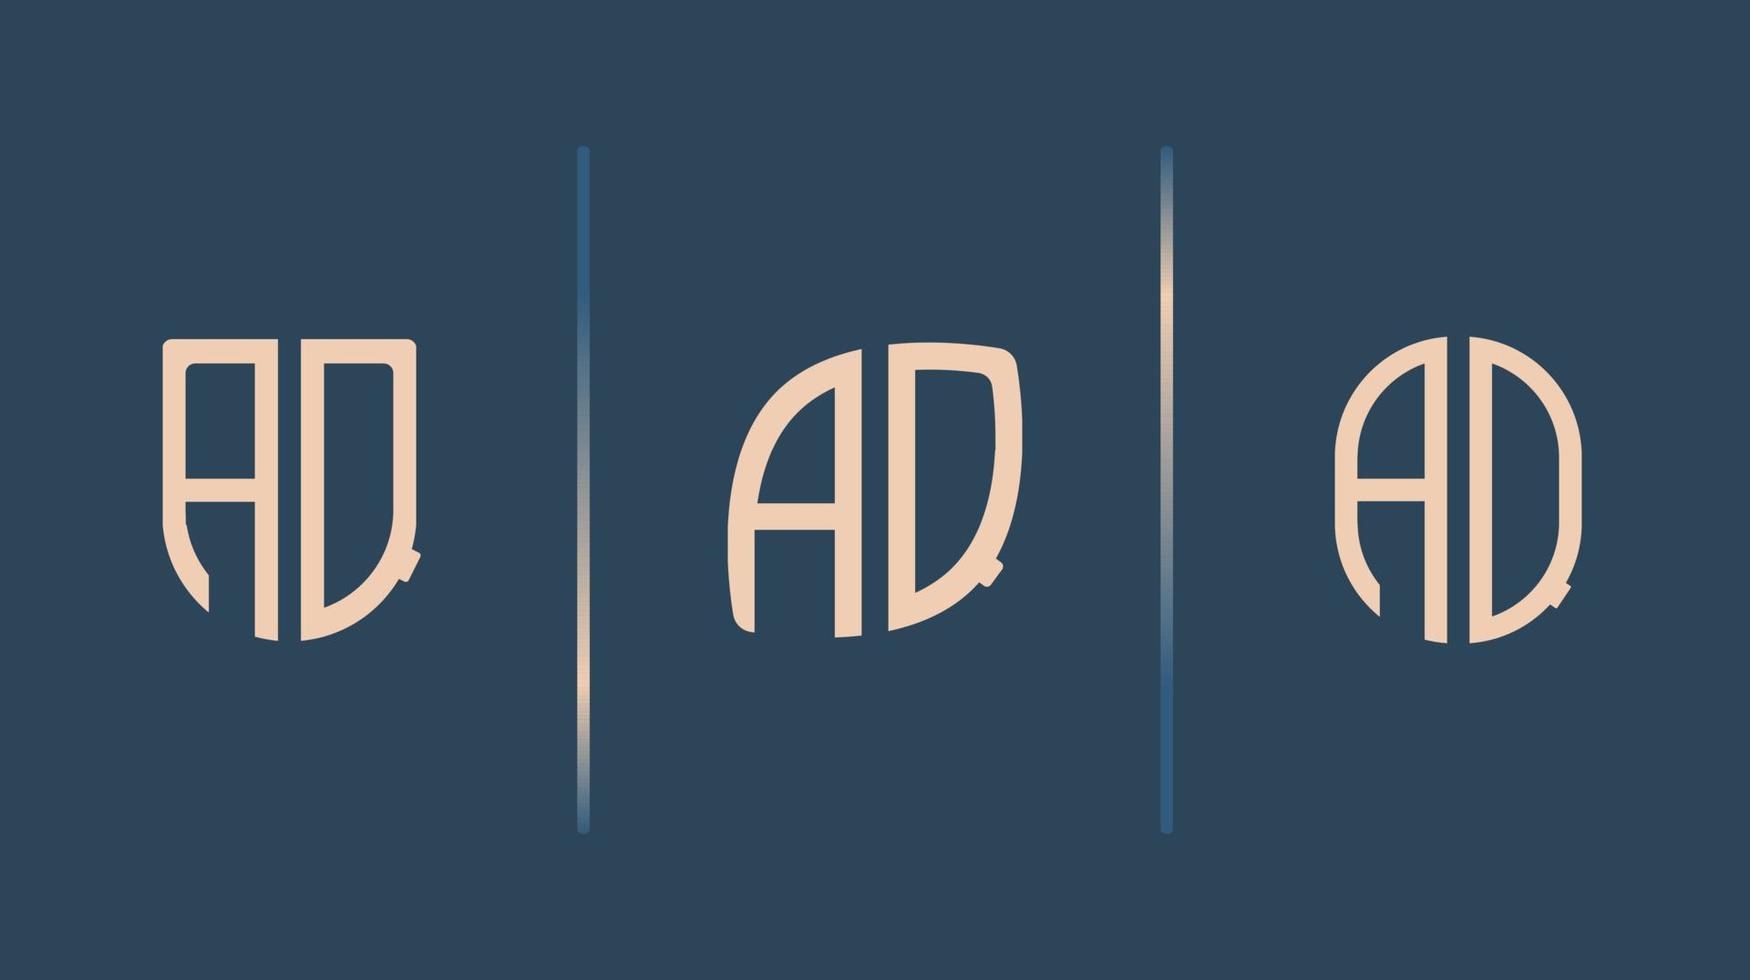 ensemble de conceptions de logo aq de lettres initiales créatives. vecteur